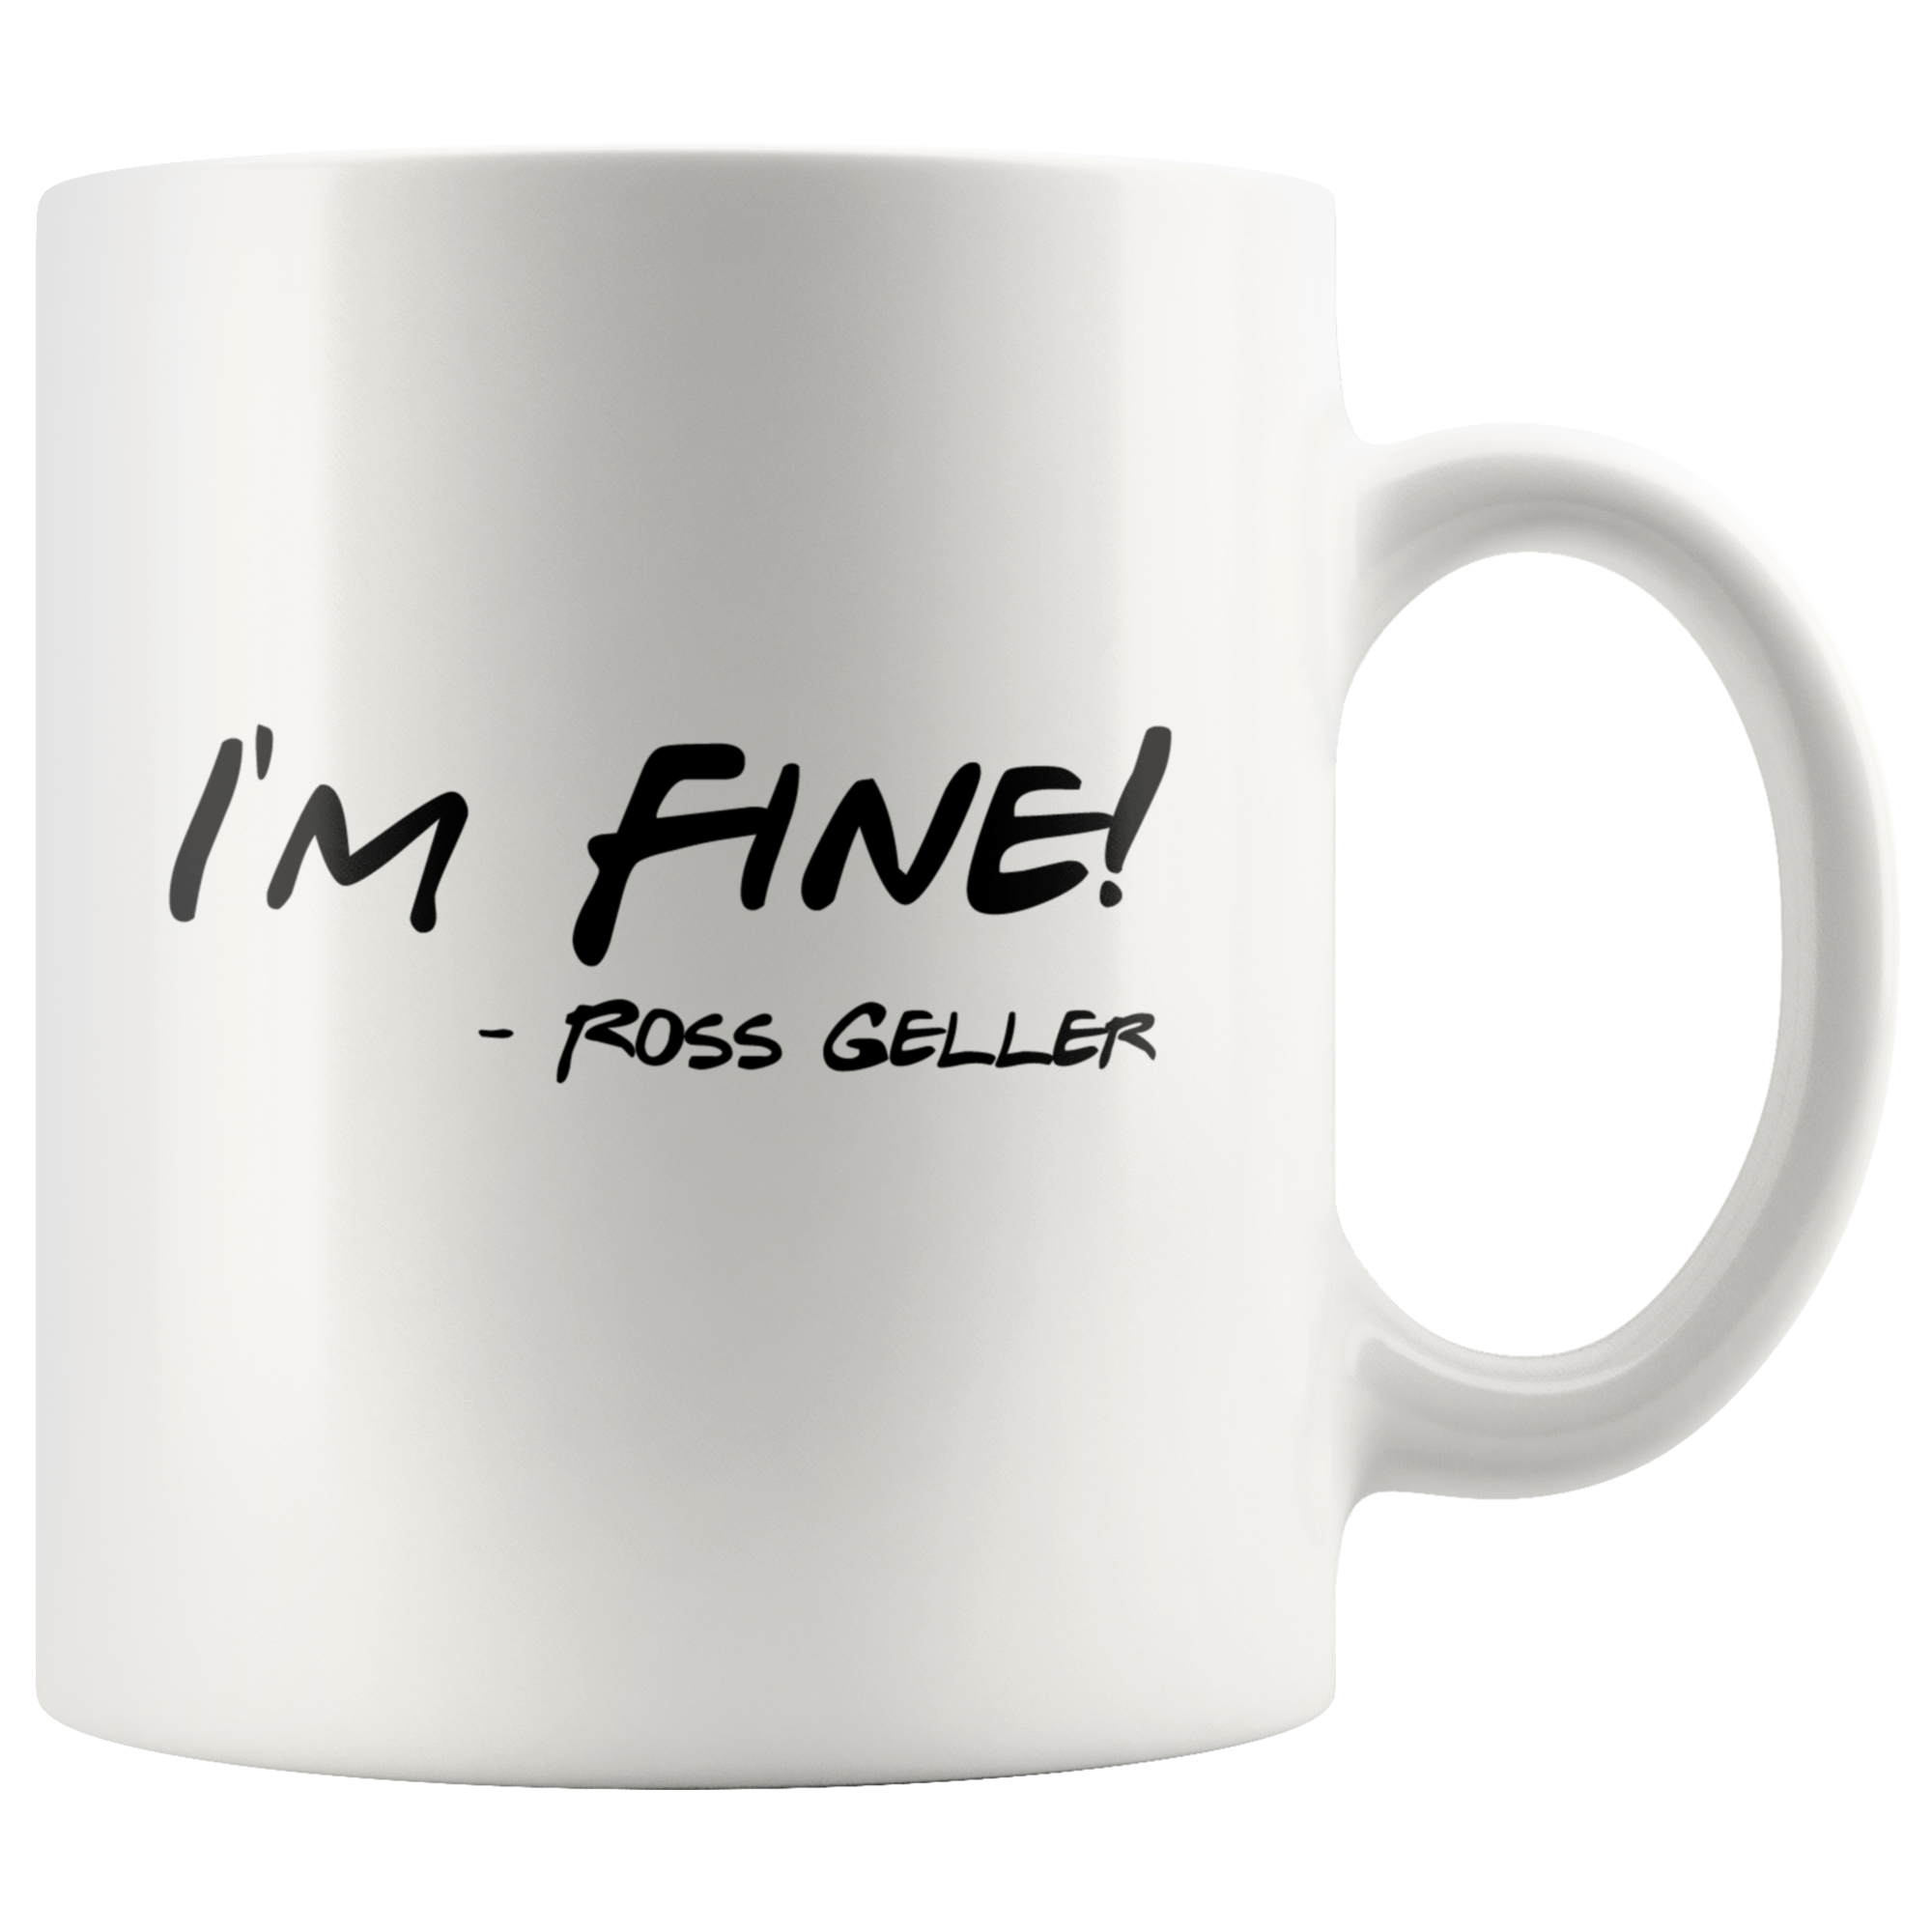 I am Fine Mug - Guestbookery